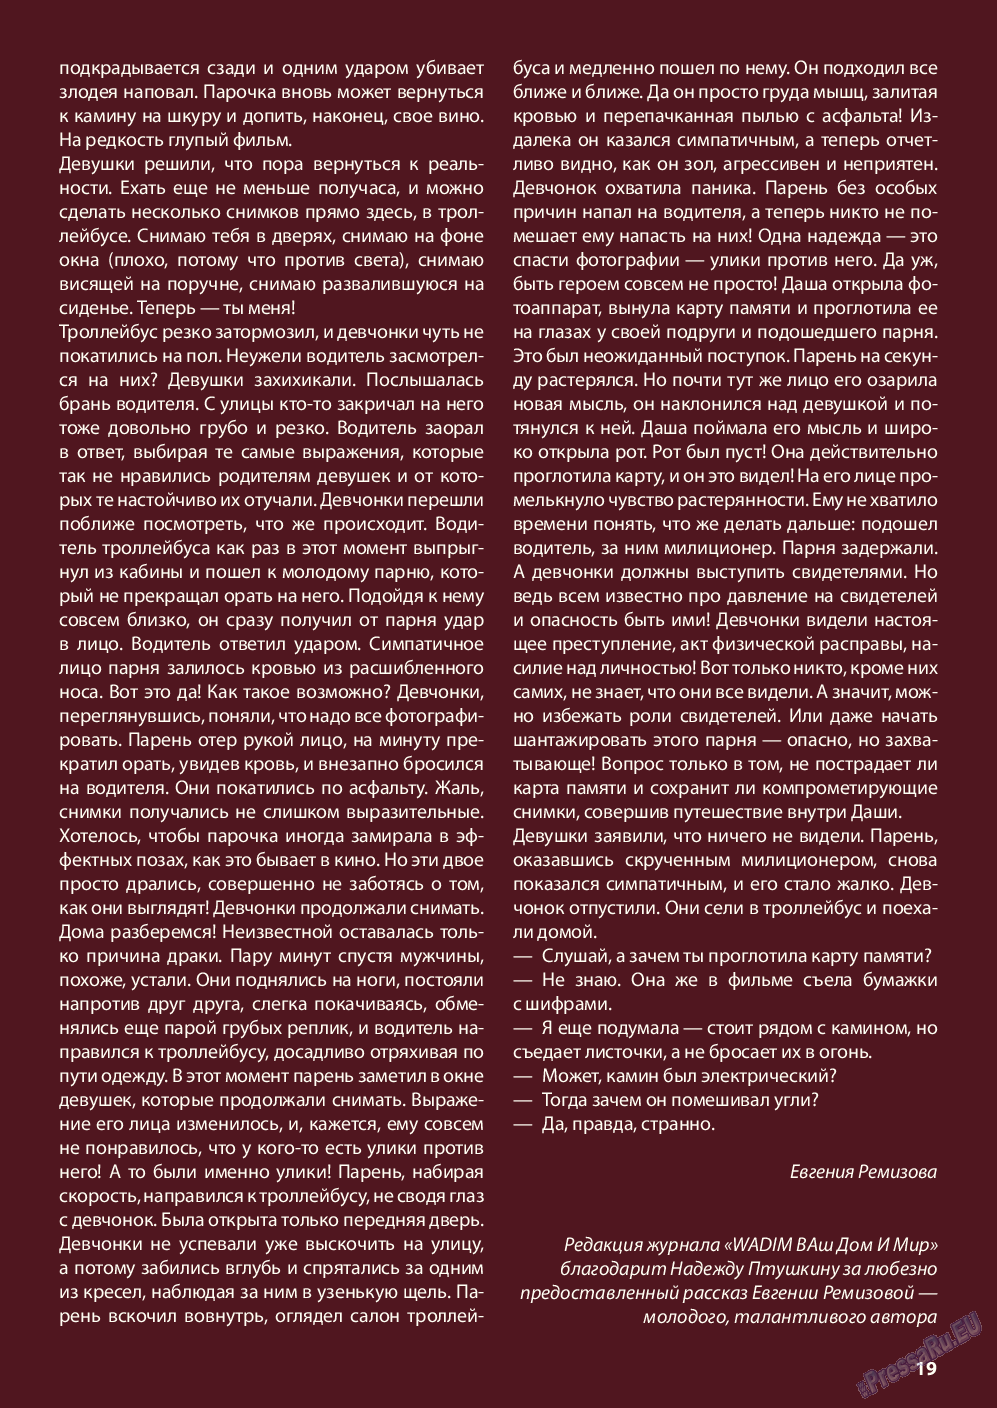 Wadim, журнал. 2013 №8 стр.19